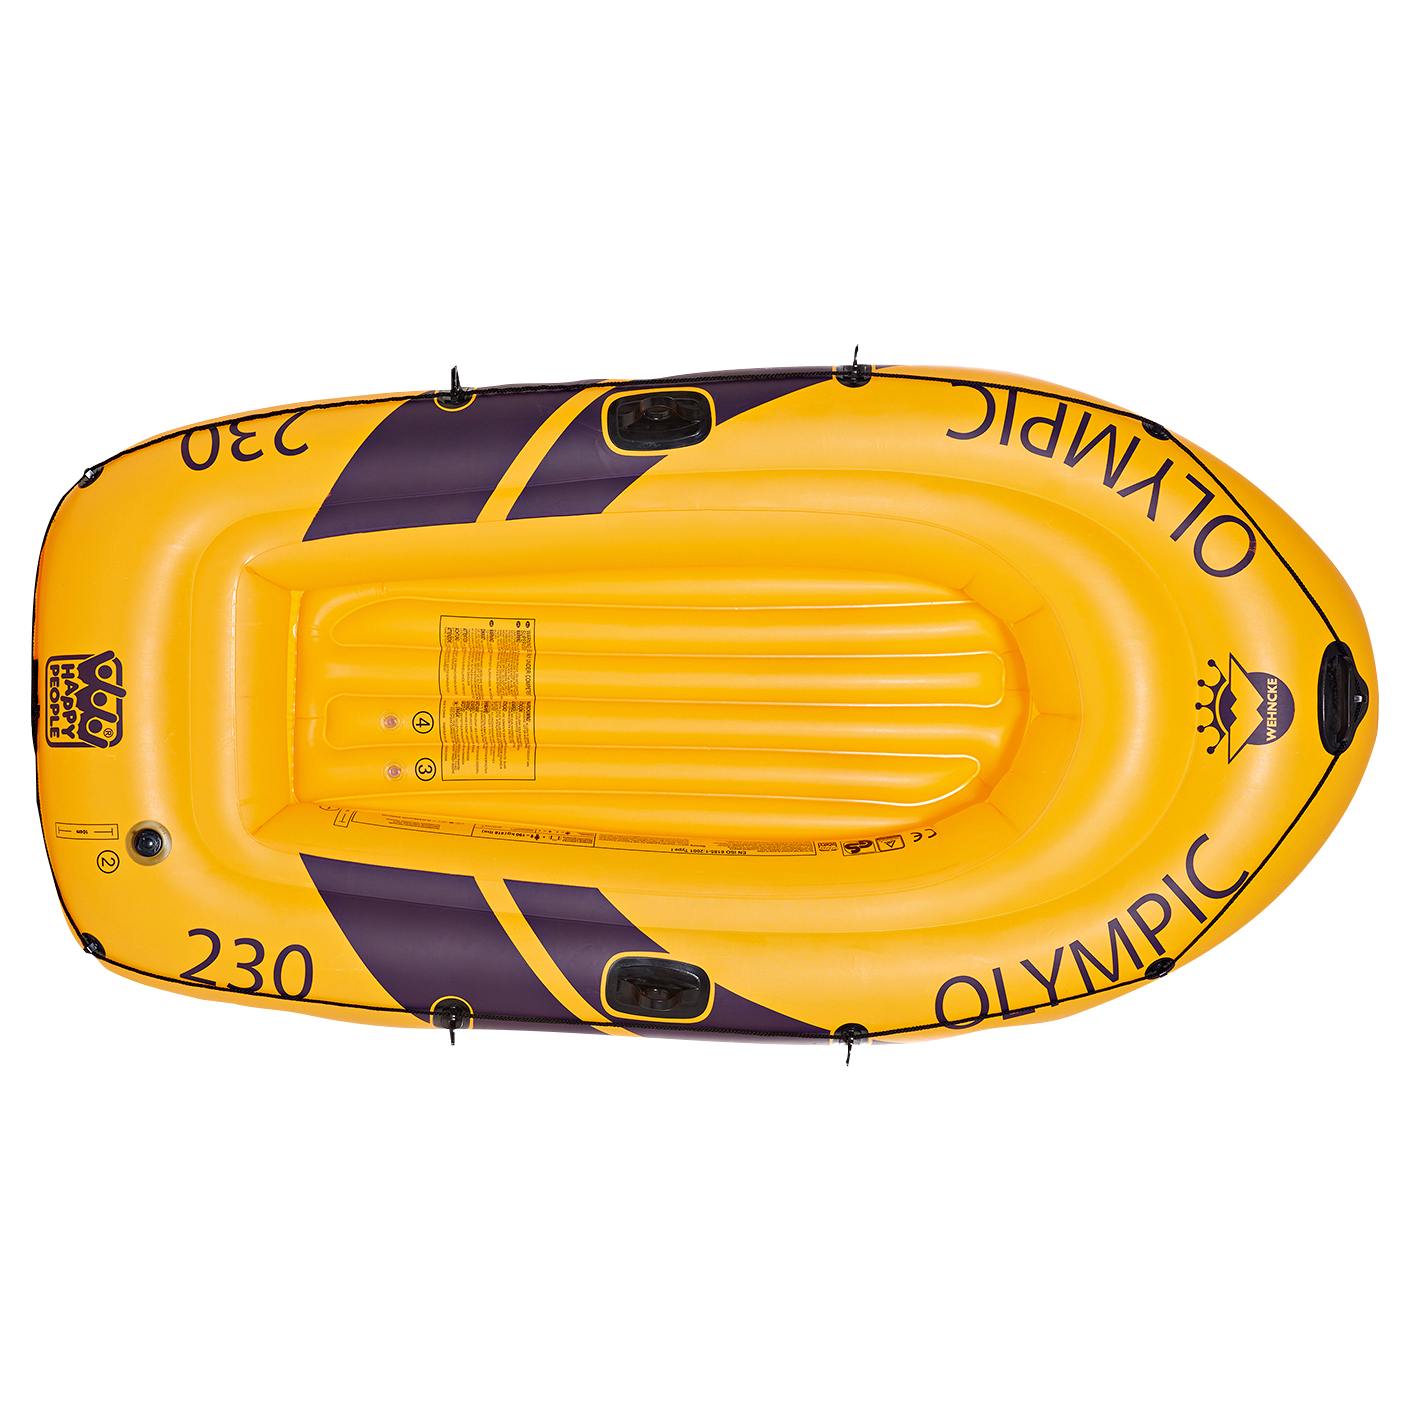 Wehncke Sportboot Olympic (230er) 